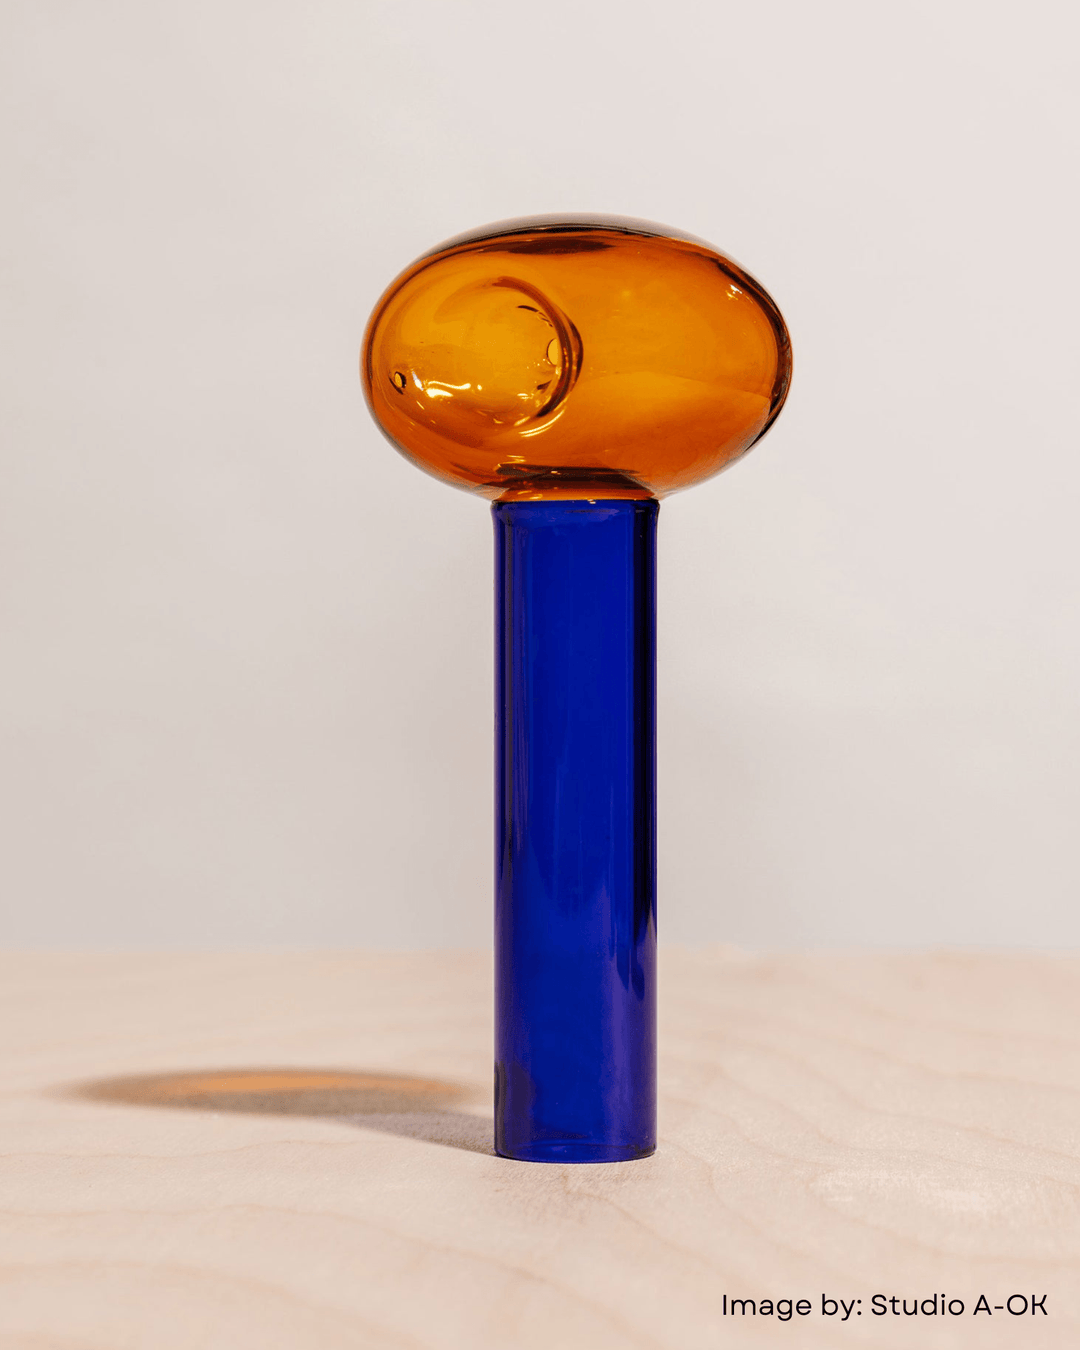 Tonal Oval Glass Pipe